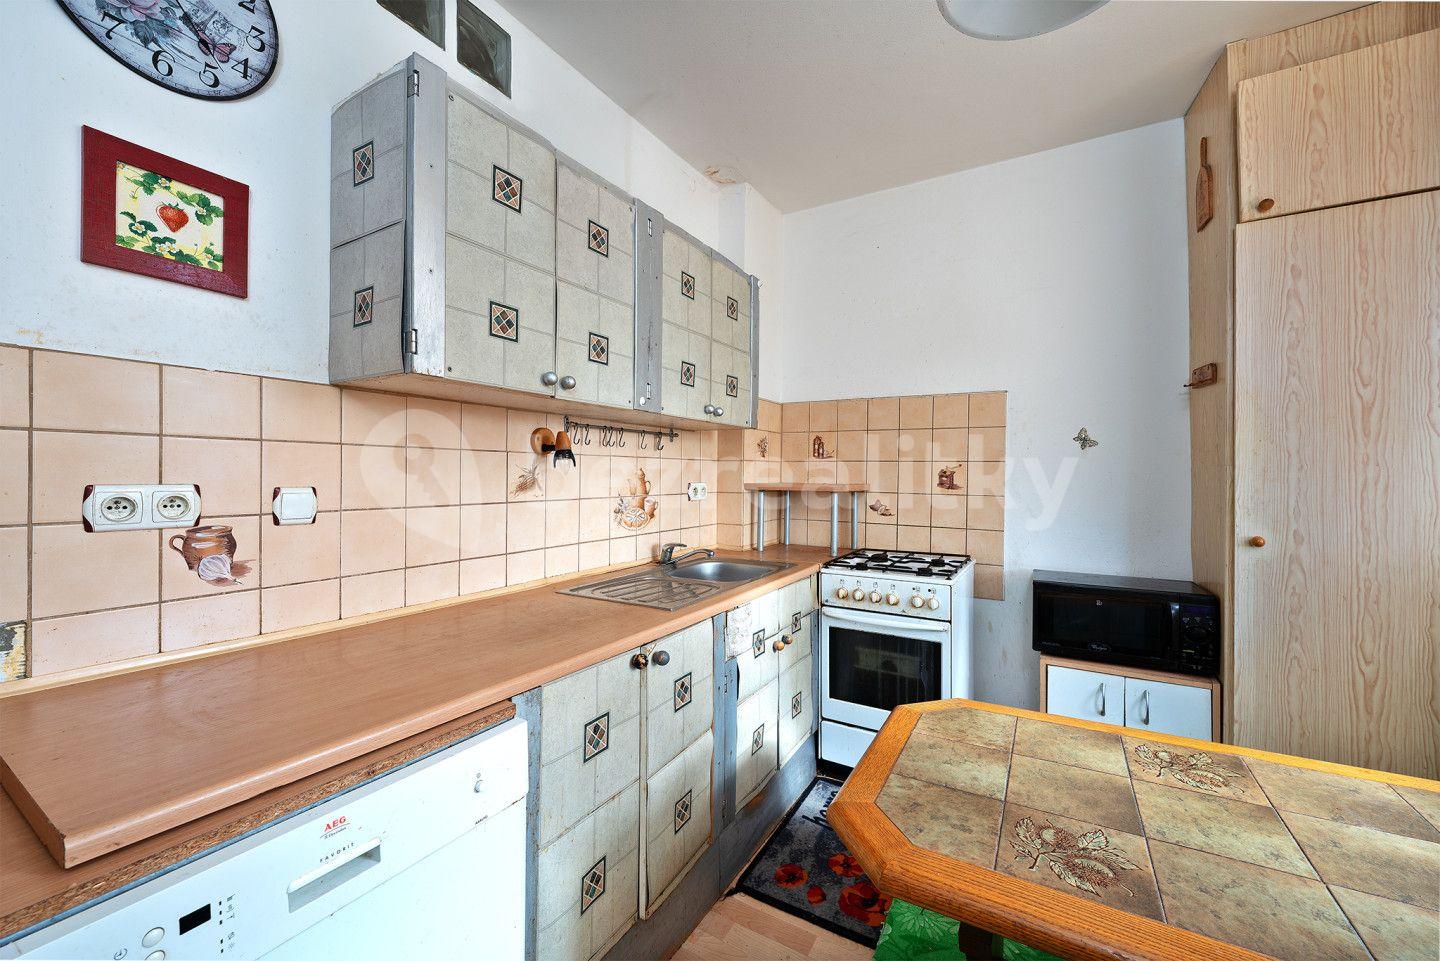 2 bedroom flat for sale, 62 m², Holešická, Chomutov, Ústecký Region